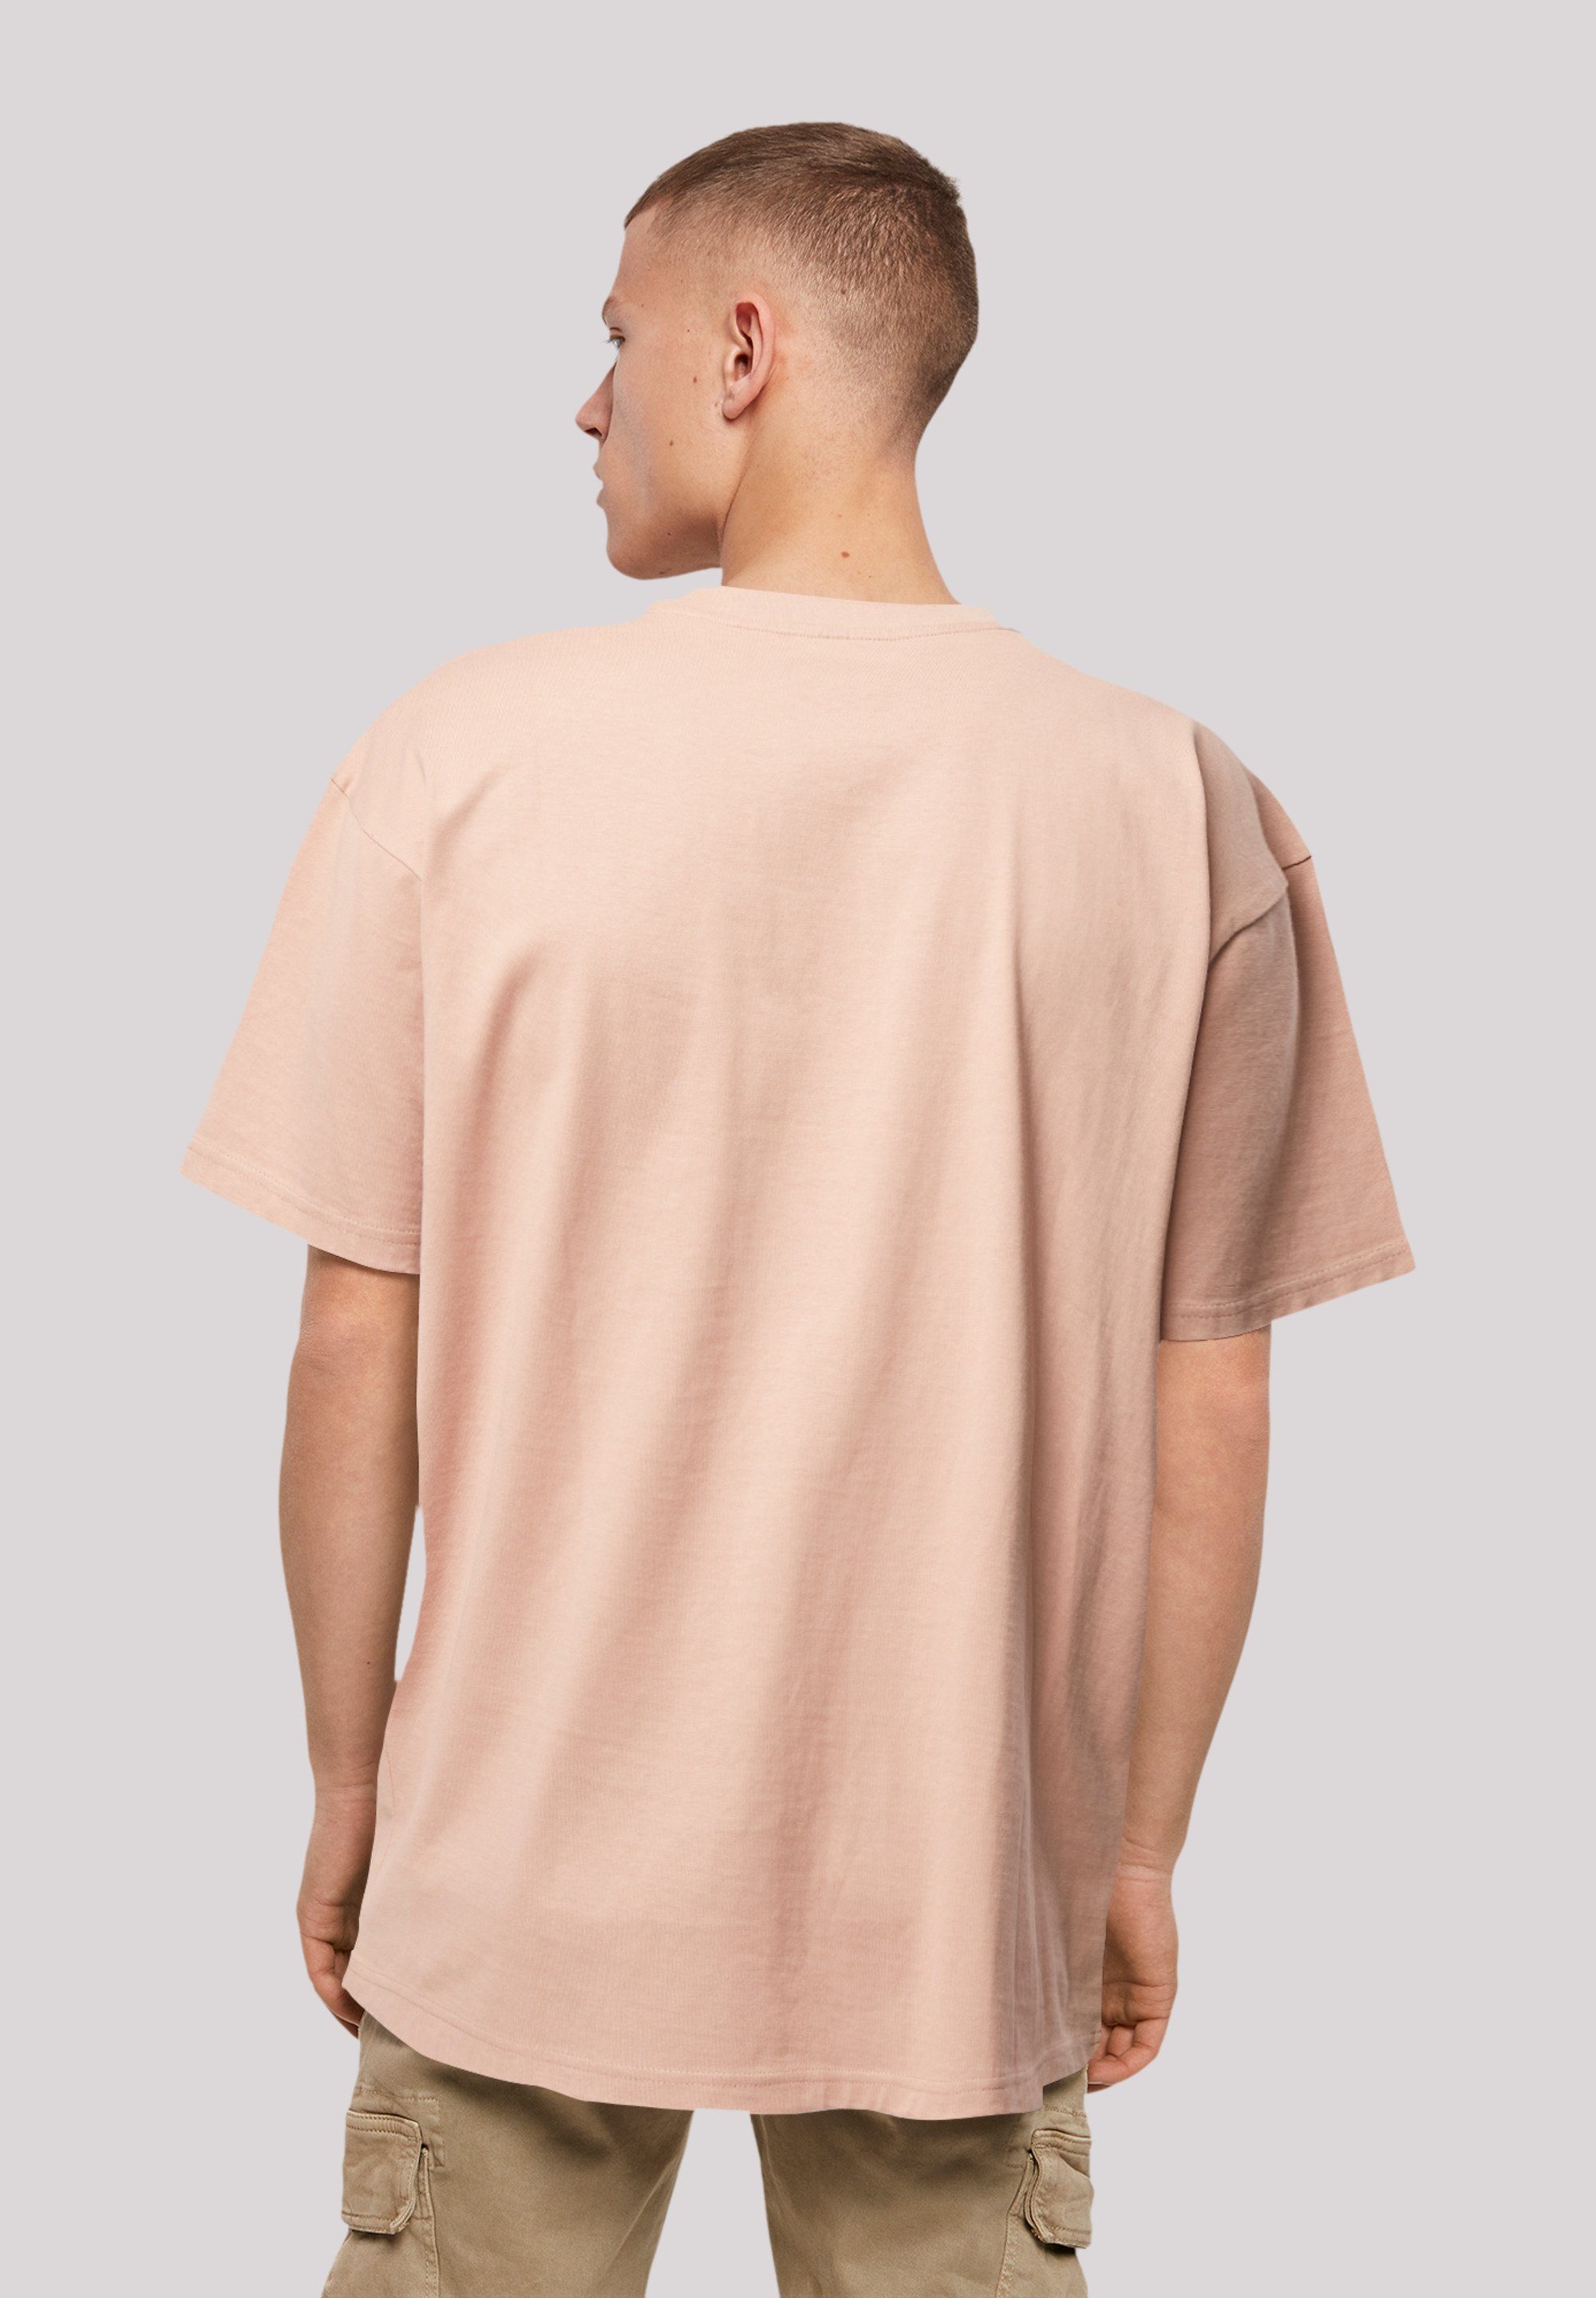 F4NT4STIC T-Shirt Eminem Hip Hop Qualität, Rap Musik Music Premium amber